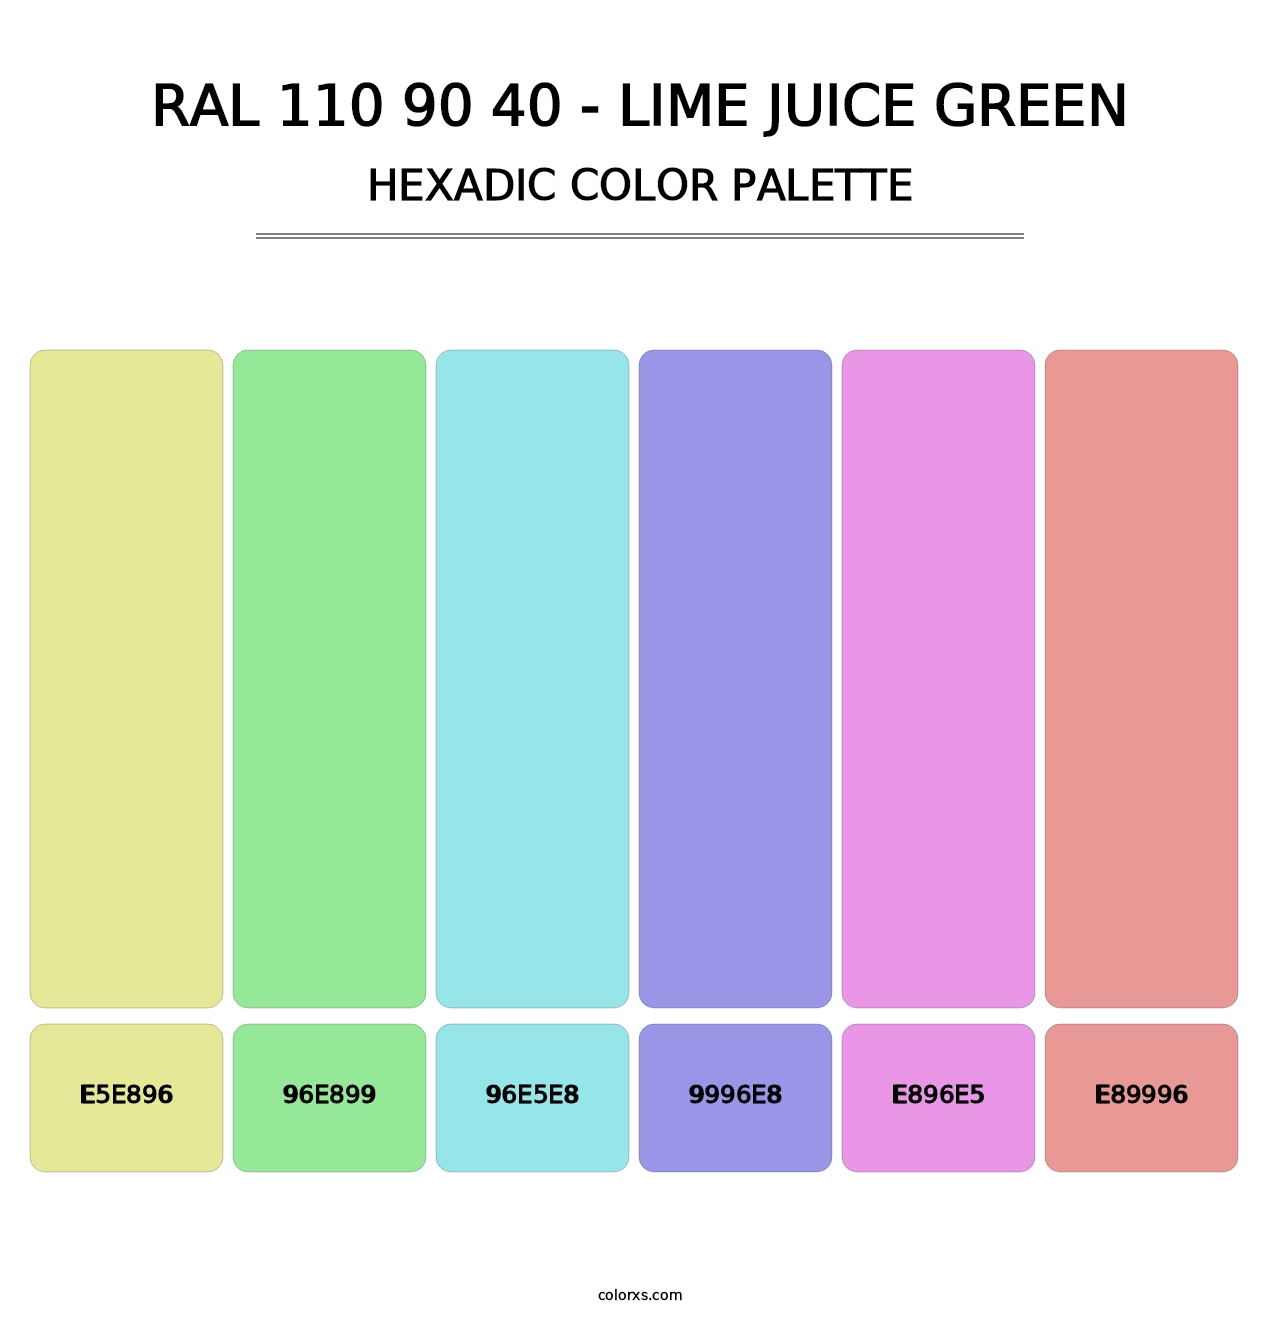 RAL 110 90 40 - Lime Juice Green - Hexadic Color Palette